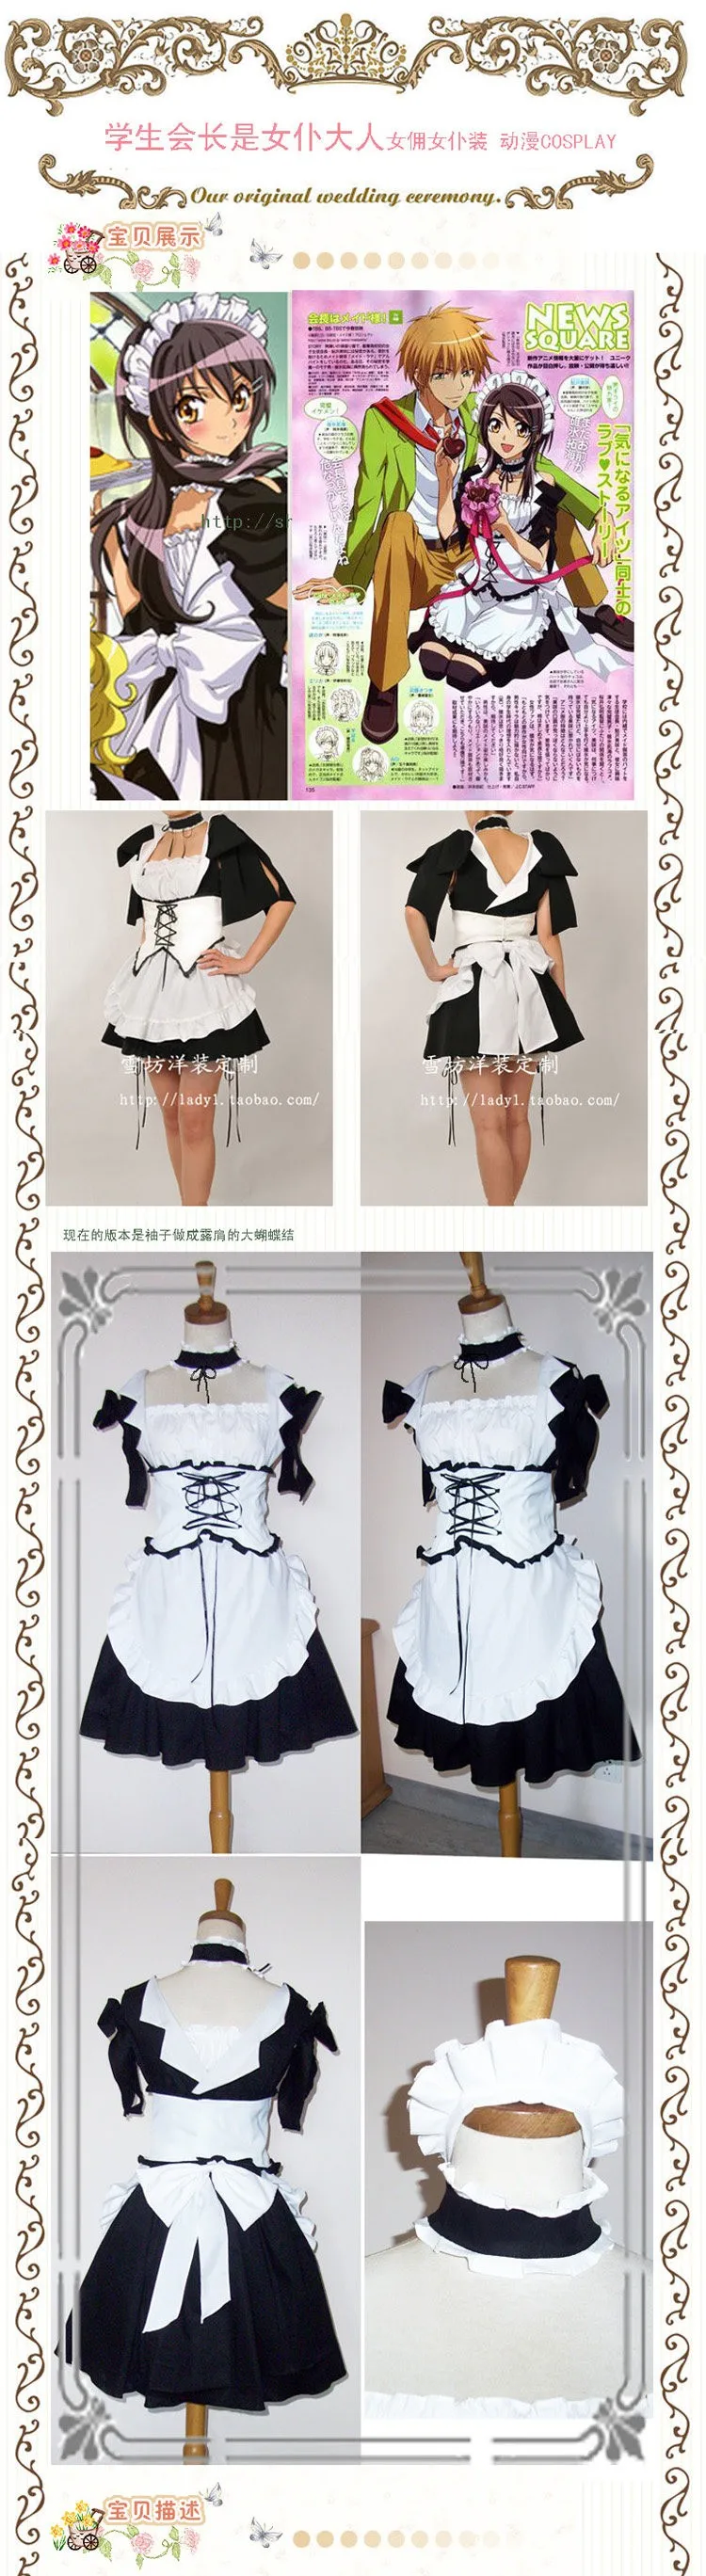 Cosplay&ware Anime Kaichou Wa Maid-sama Cosplay Ayuzawa Misaki Halloween Maid Service Full Set 4in1dressesbow-knotapronbelt -Outlet Maid Outfit Store